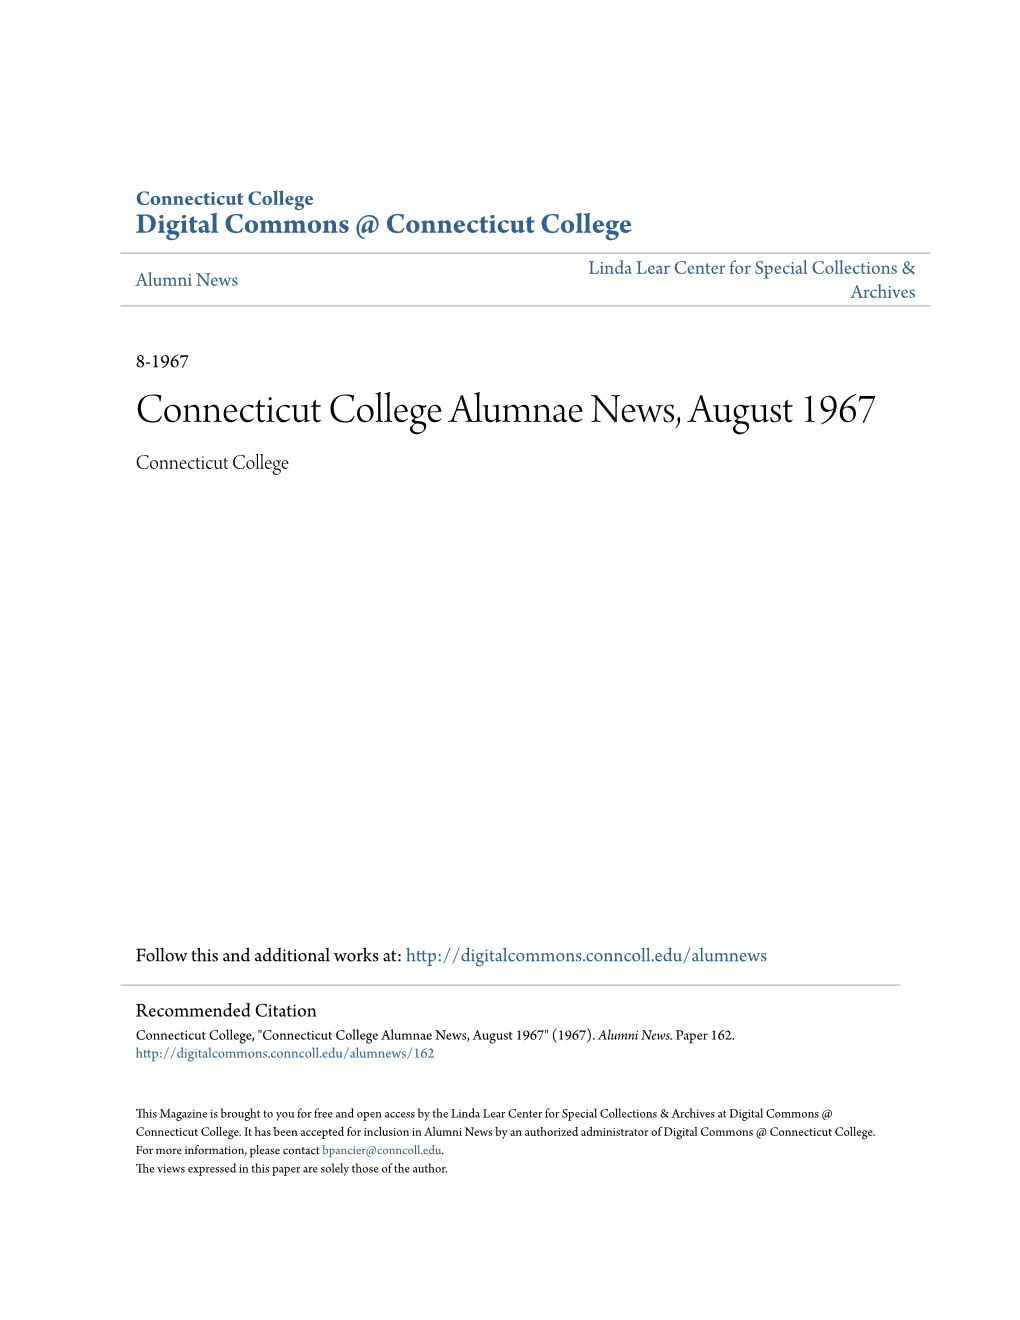 Connecticut College Alumnae News, August 1967 Connecticut College